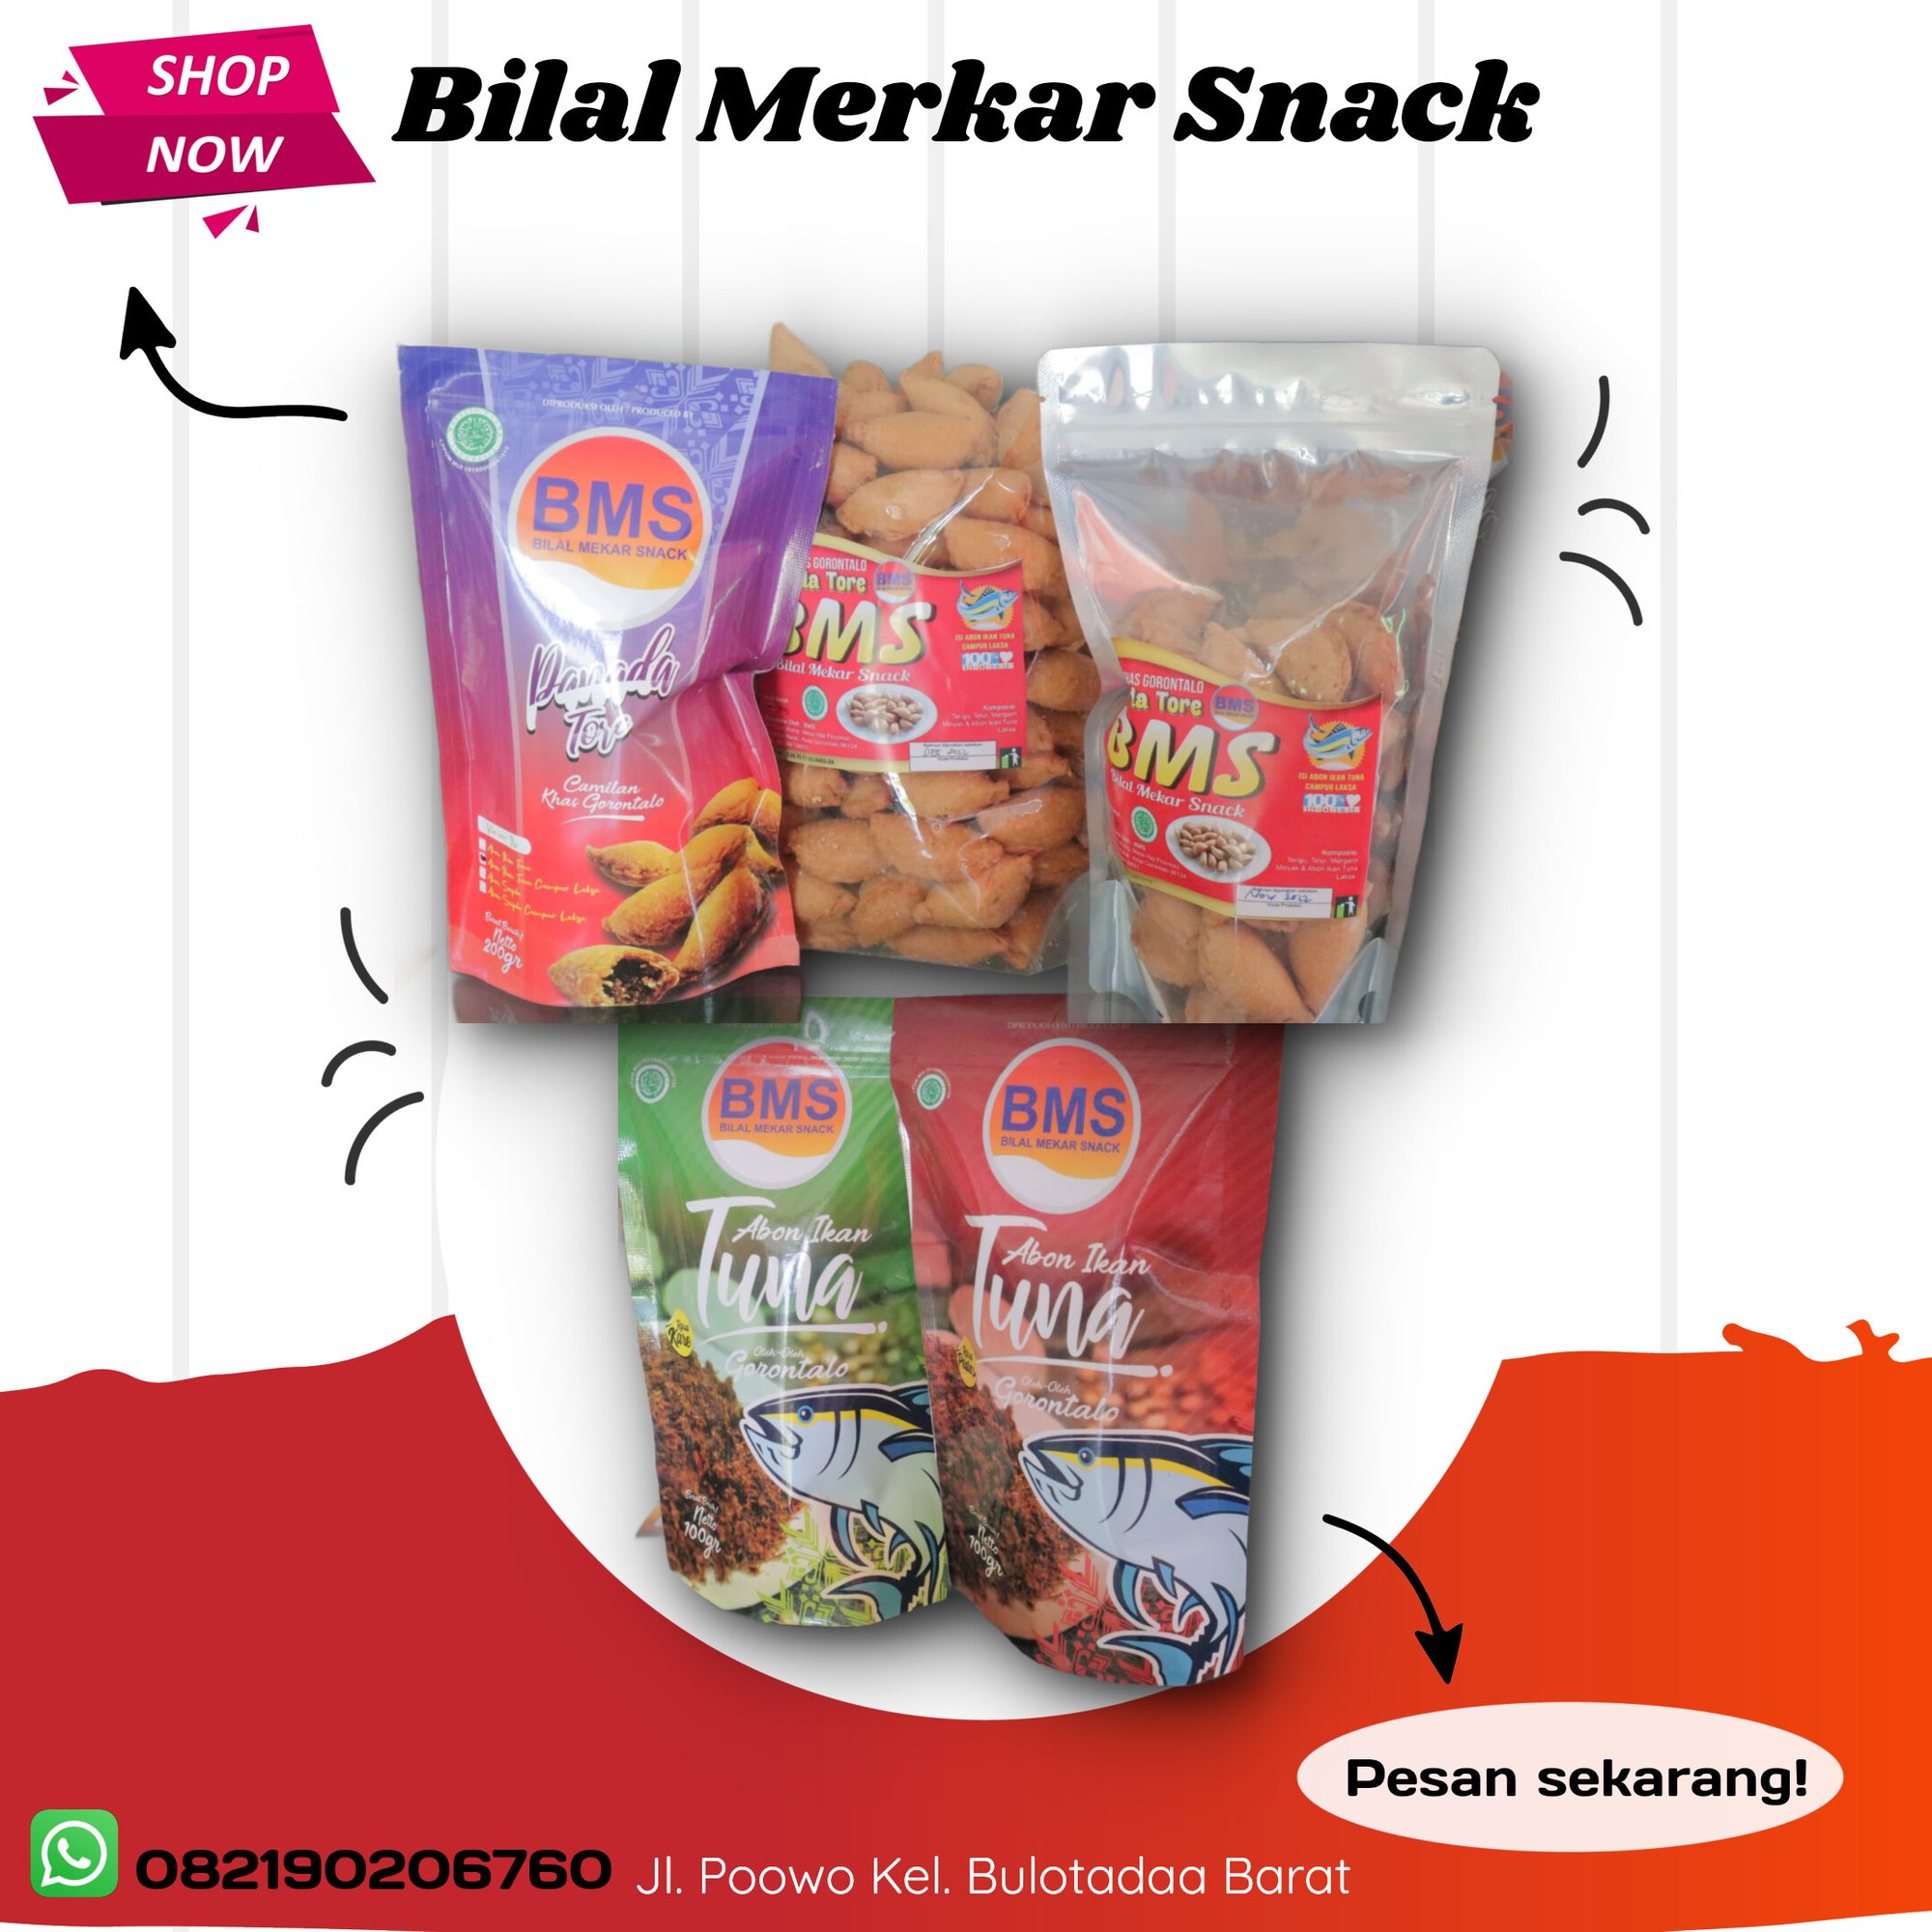 23. Additional-geoproduk Bilal Mekar Snack